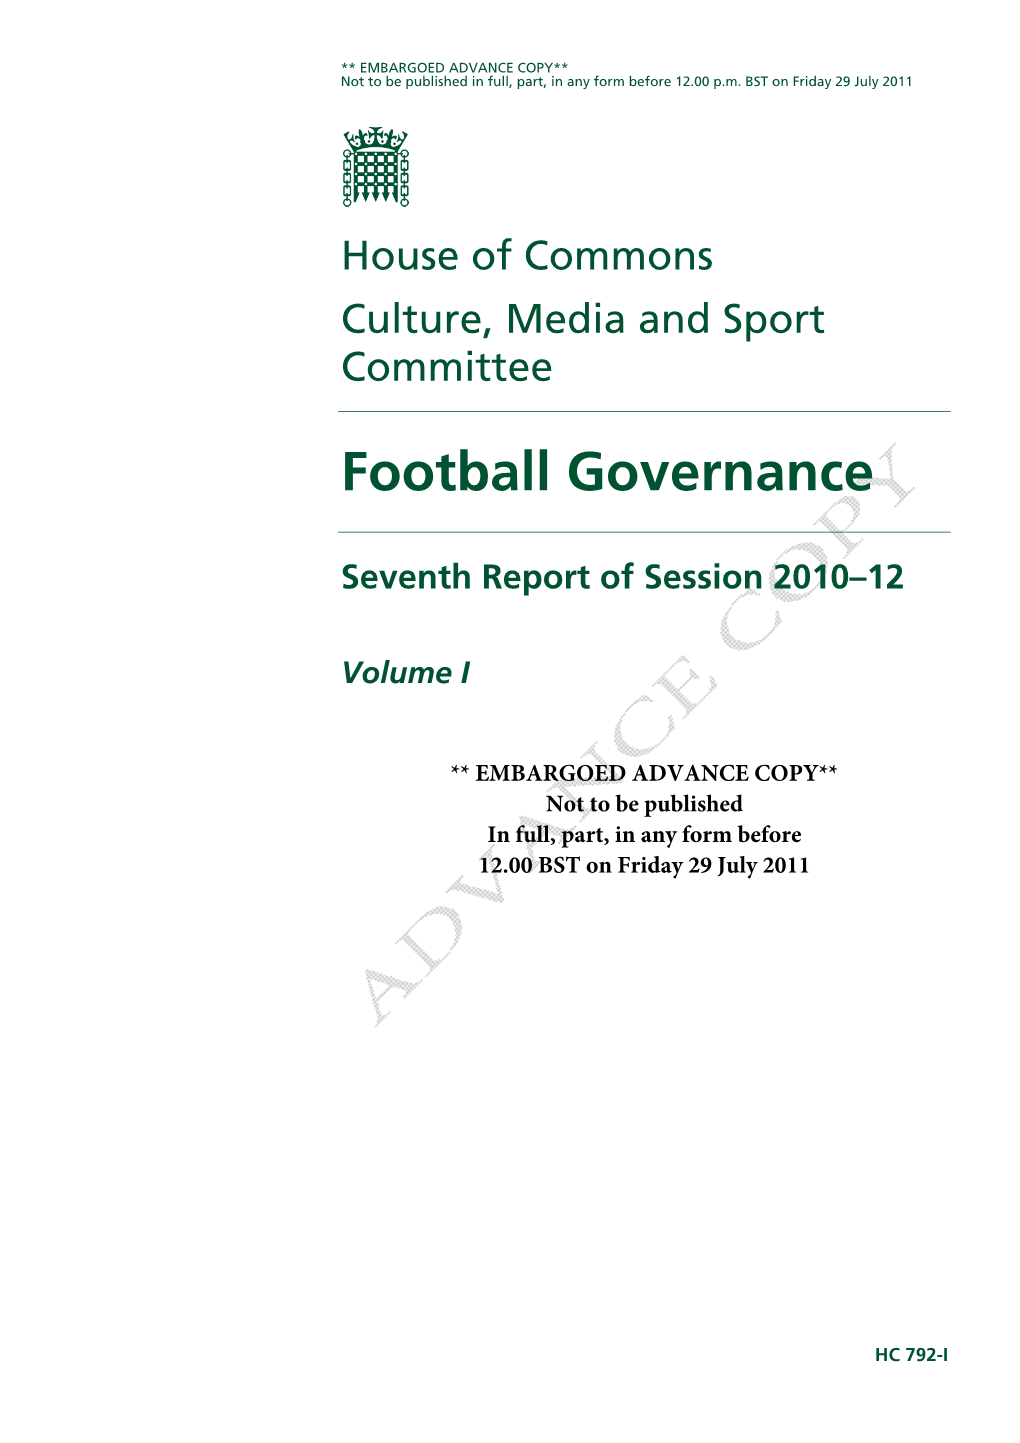 UK Parliamentary Report on Football Governance